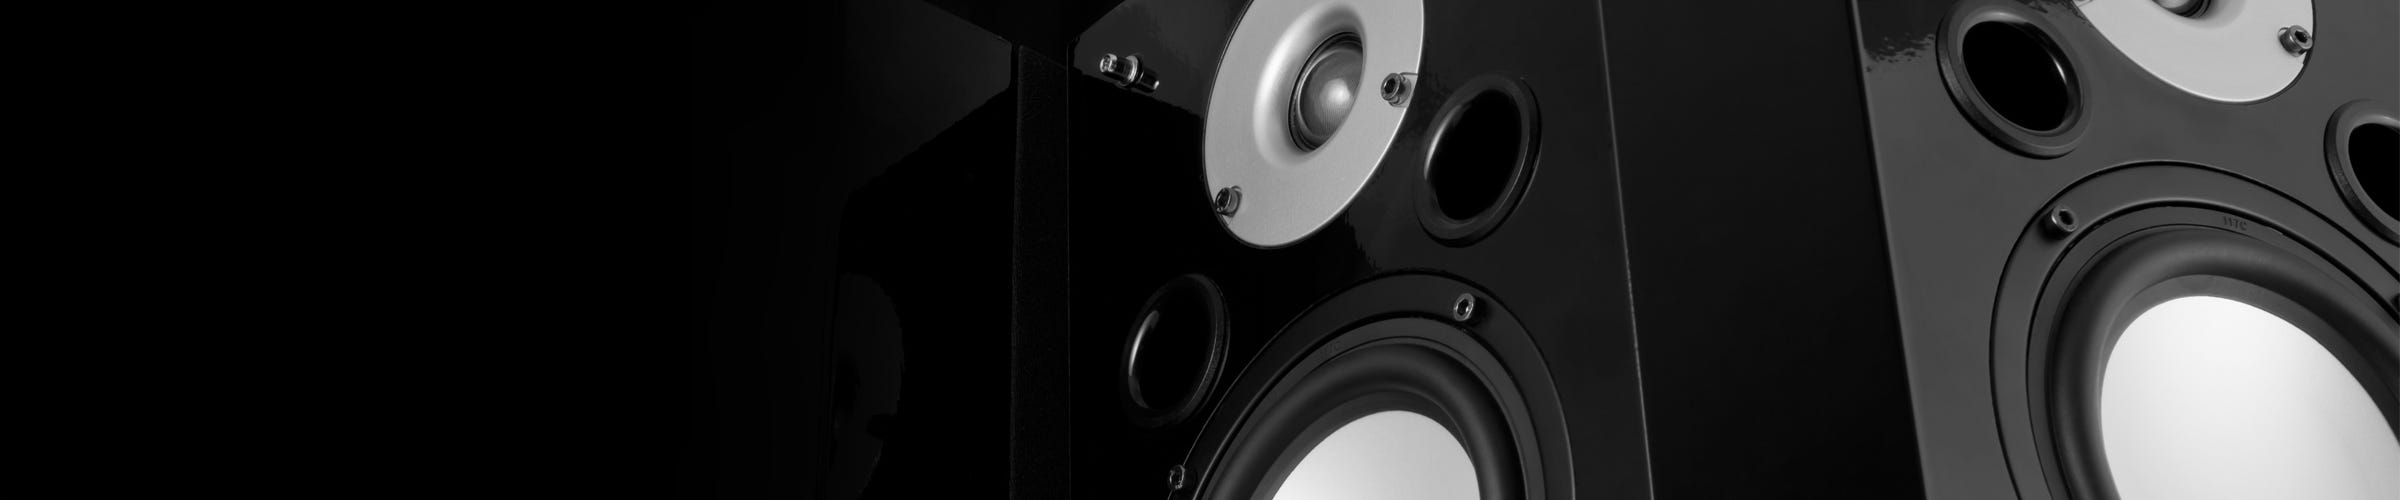 XLBP Bipolar Surround Sound Speakers Intro